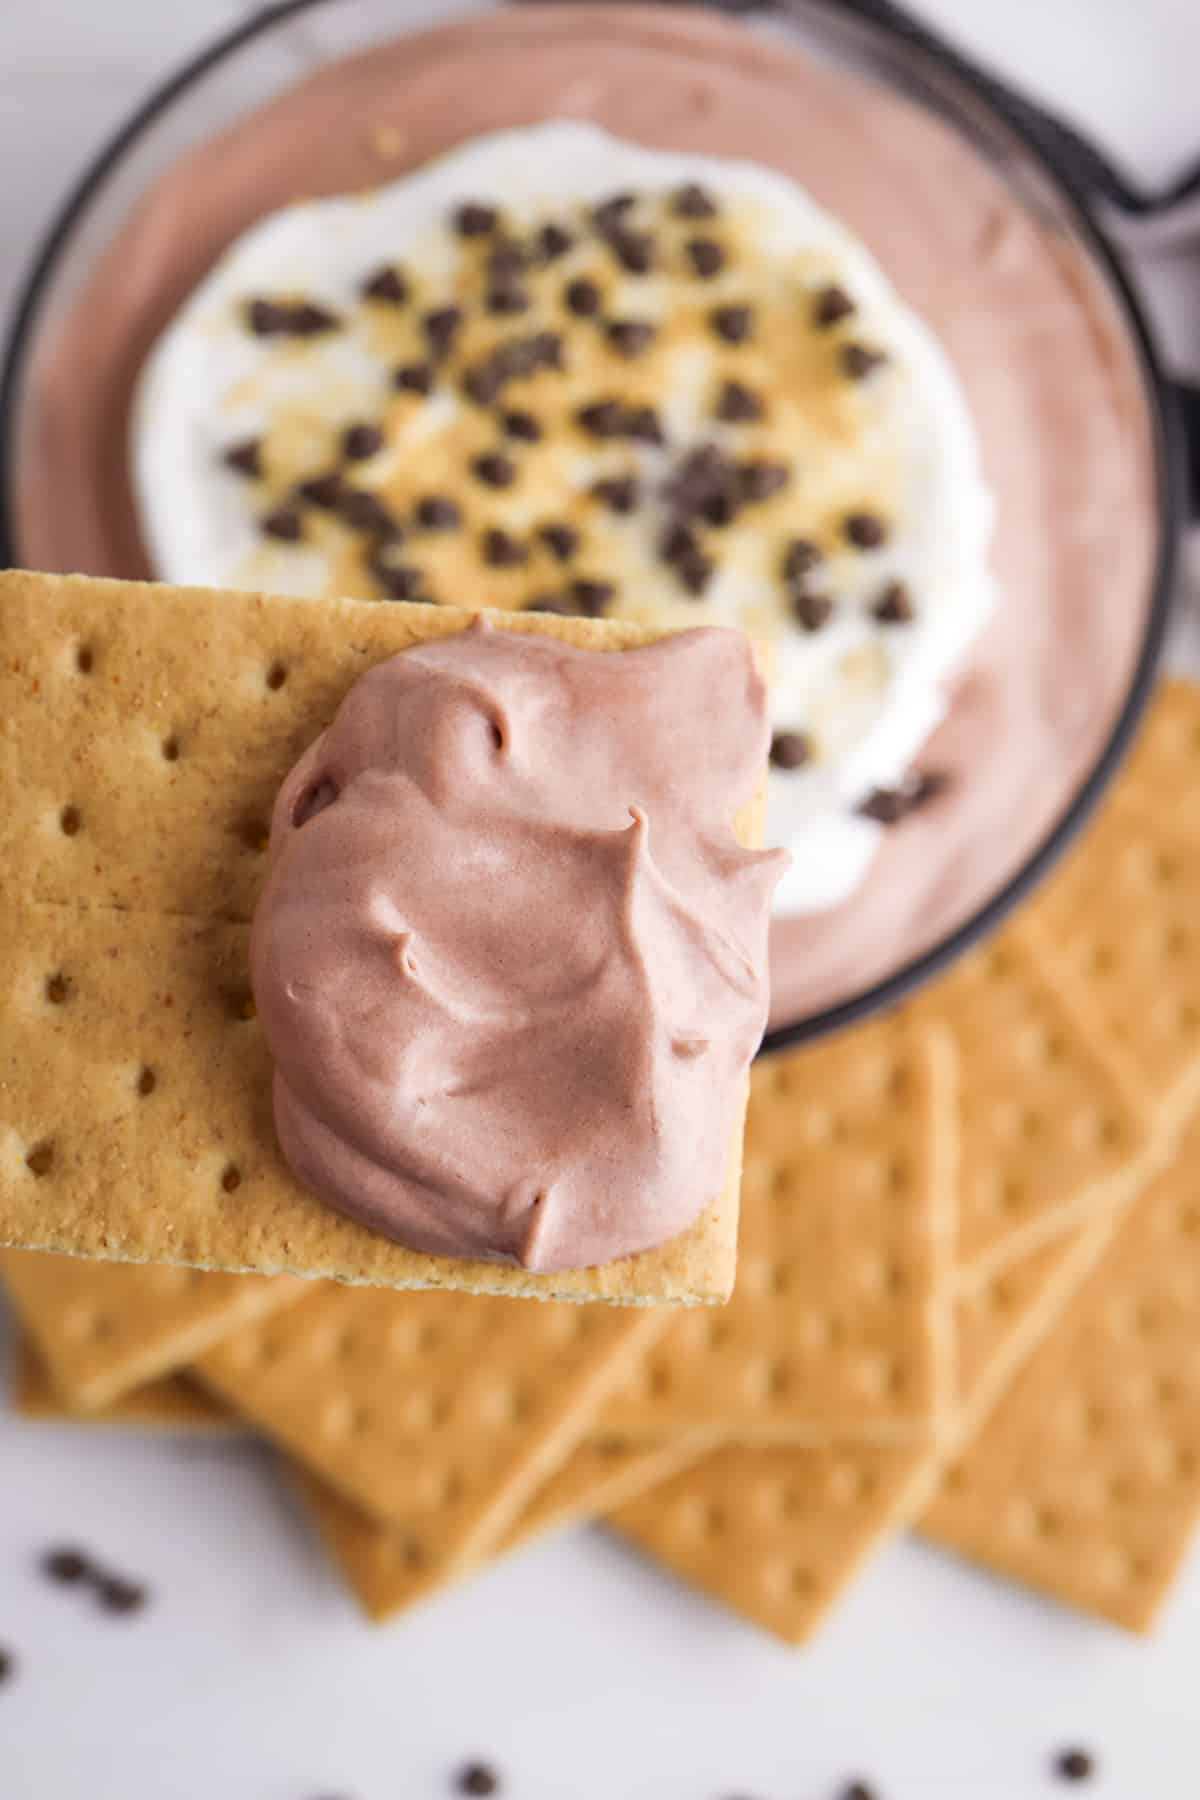 Chocolate pudding dip on graham cracker.